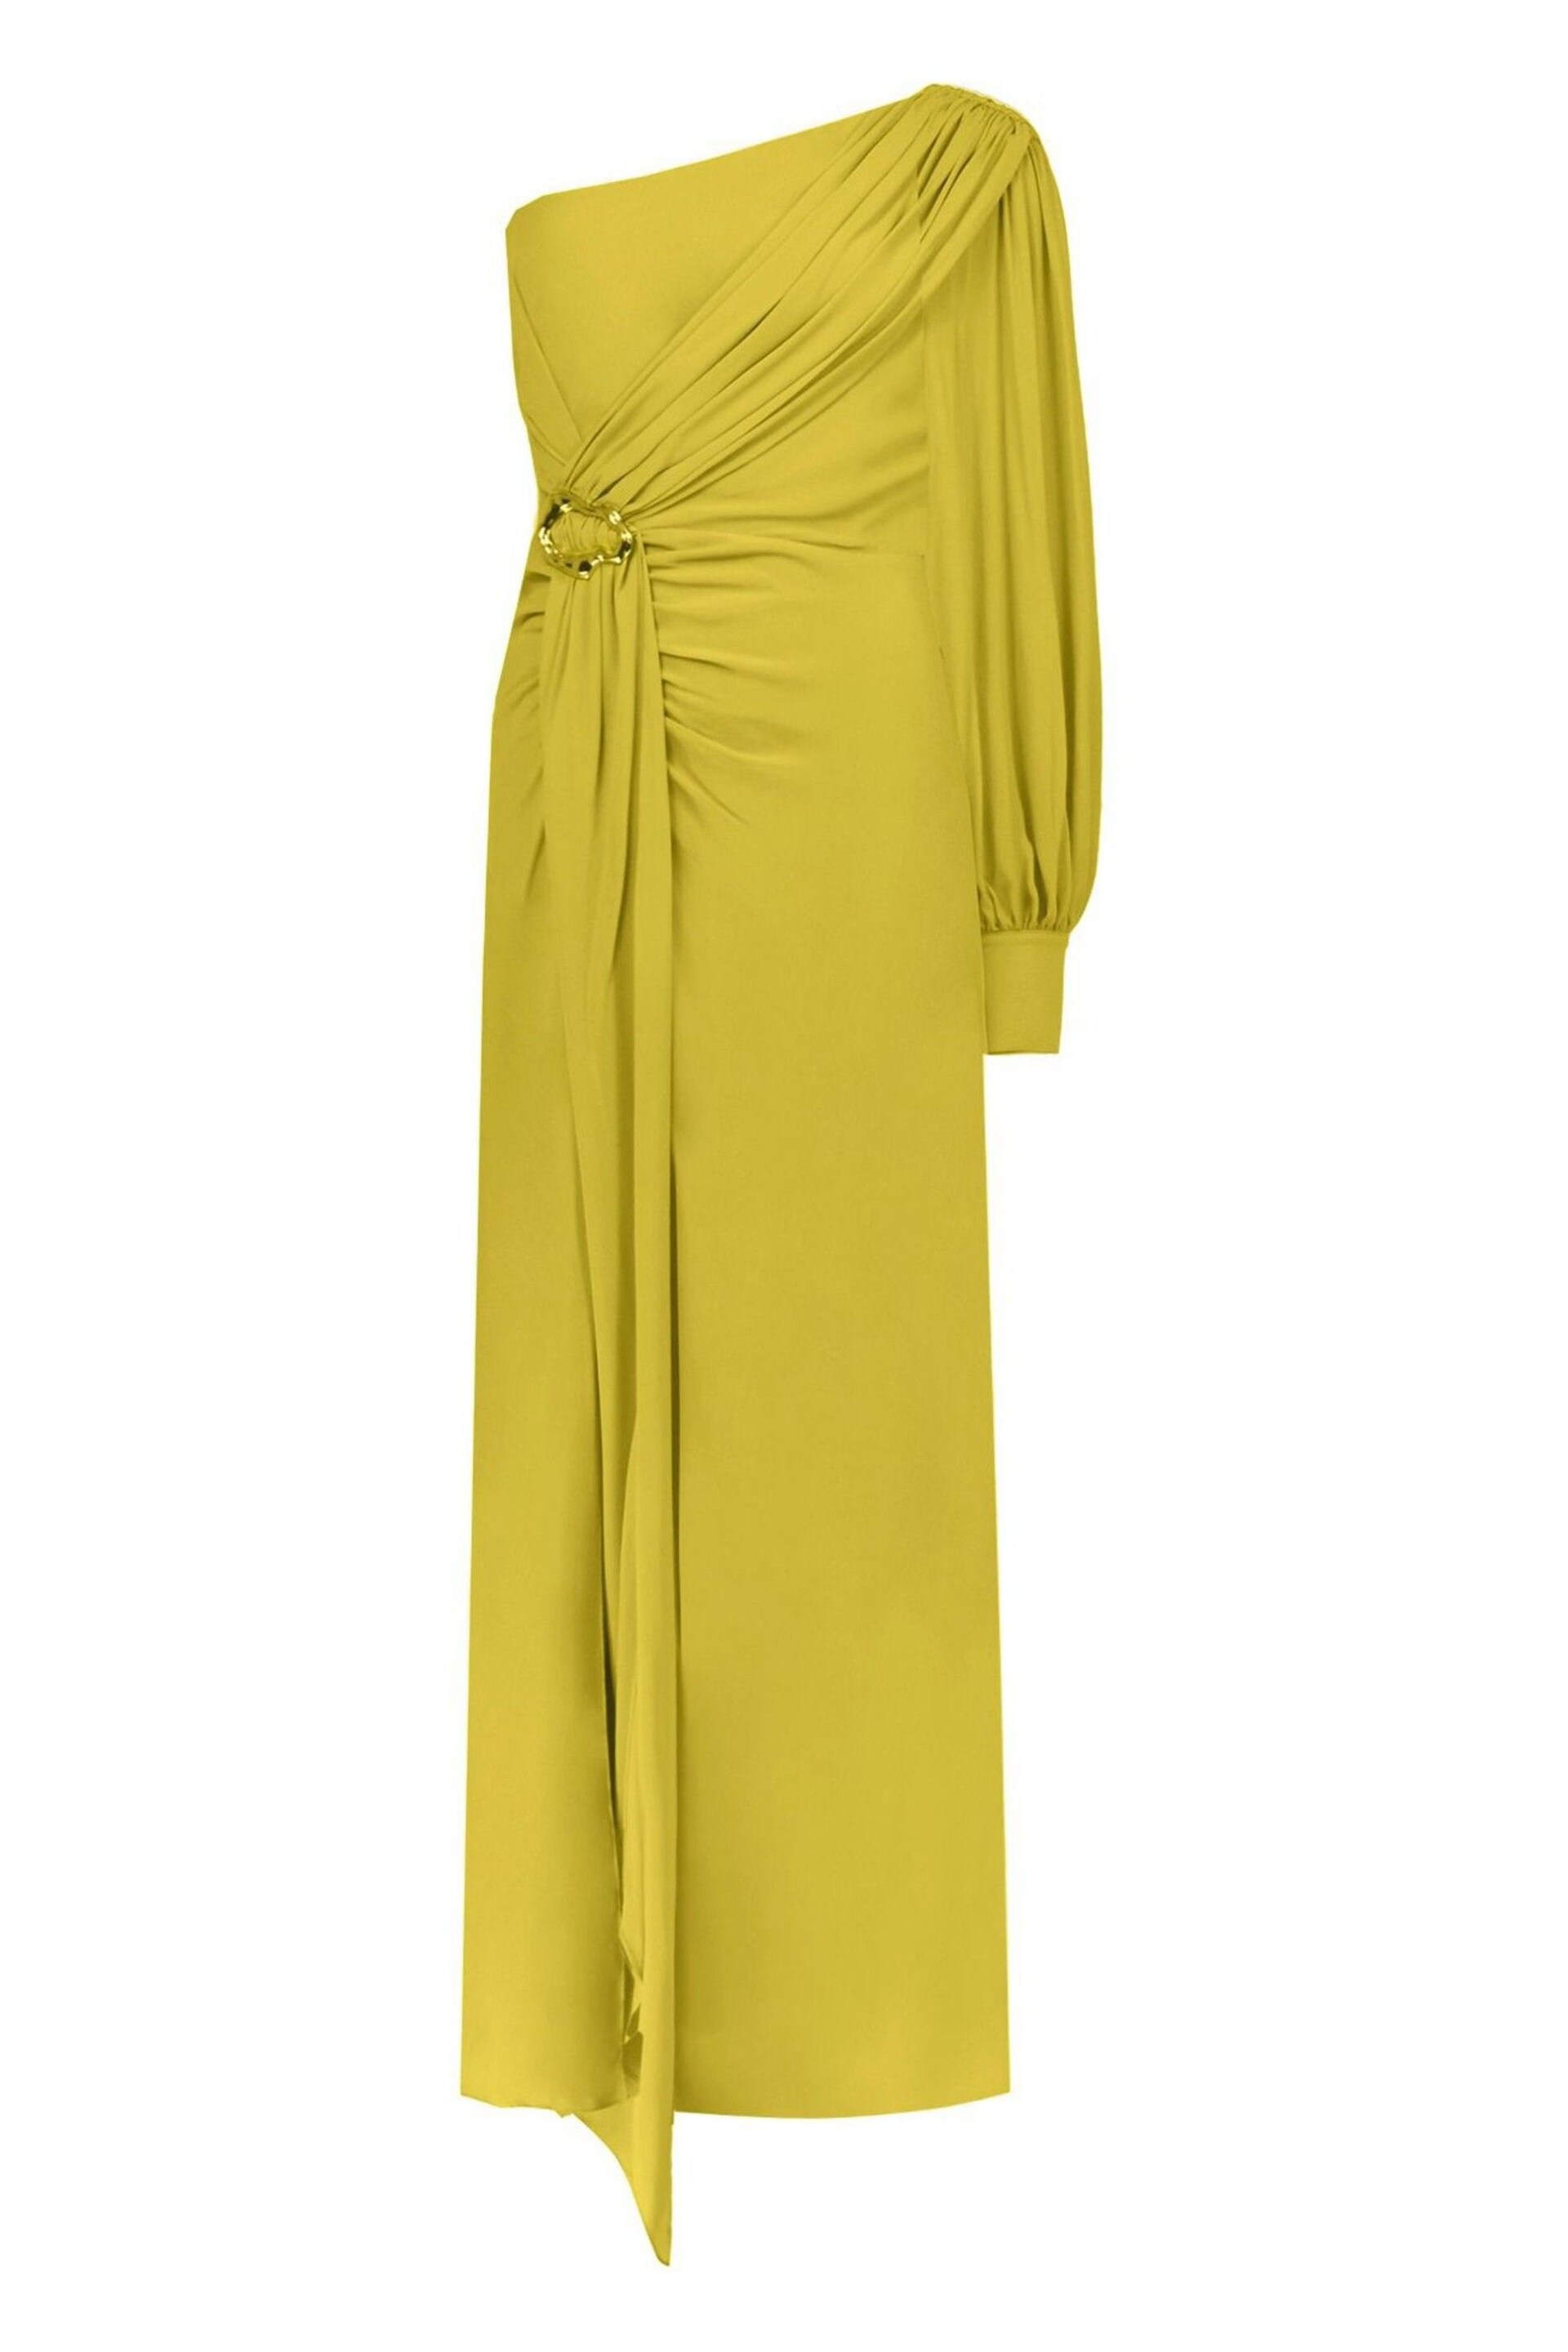 Ro&Zo Yellow Trim Detail Dress - Image 8 of 8